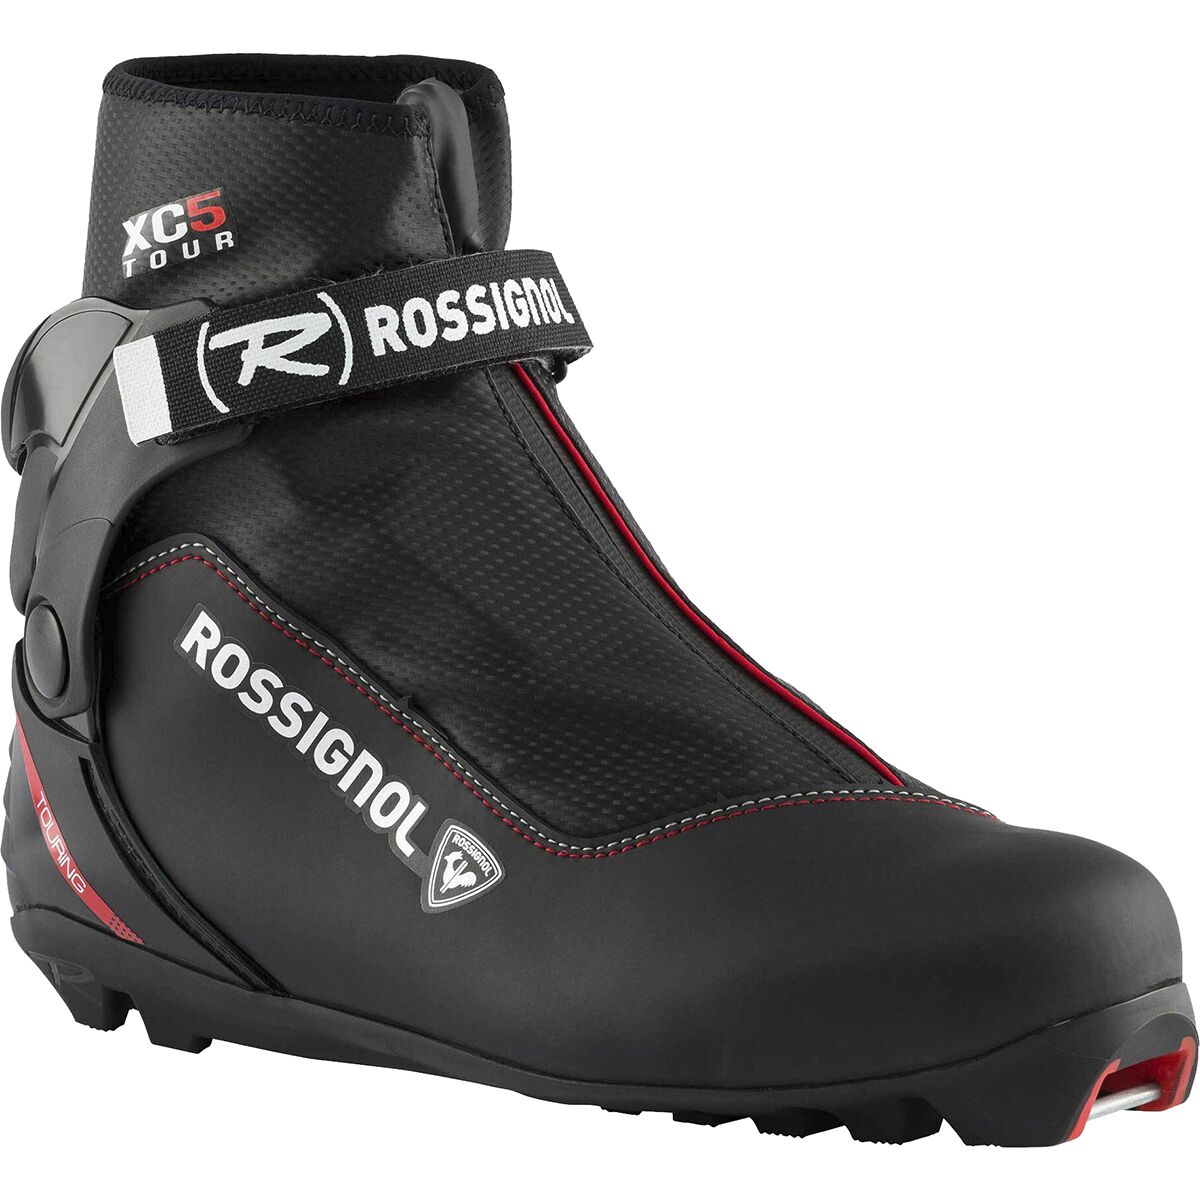 Rossignol XC 5 Ski Boot